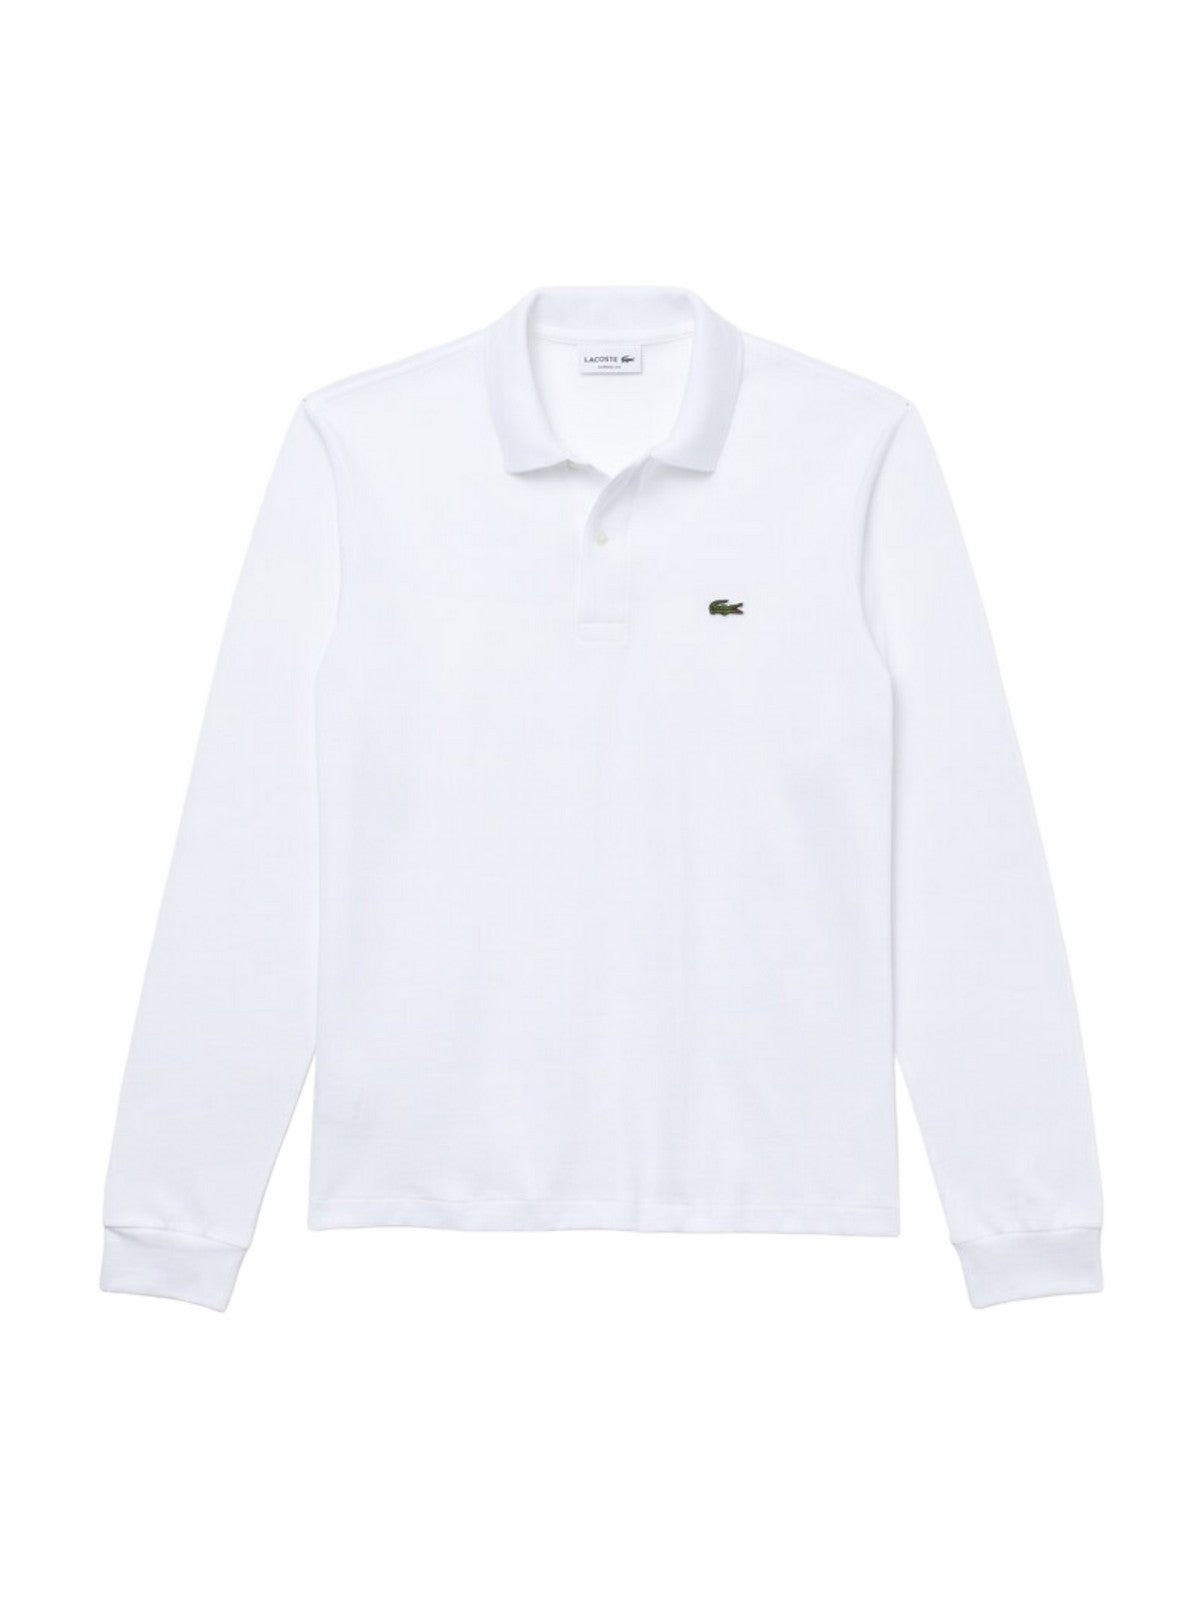 LACOSTE T-Shirt e Polo Uomo  L1312 001 Bianco